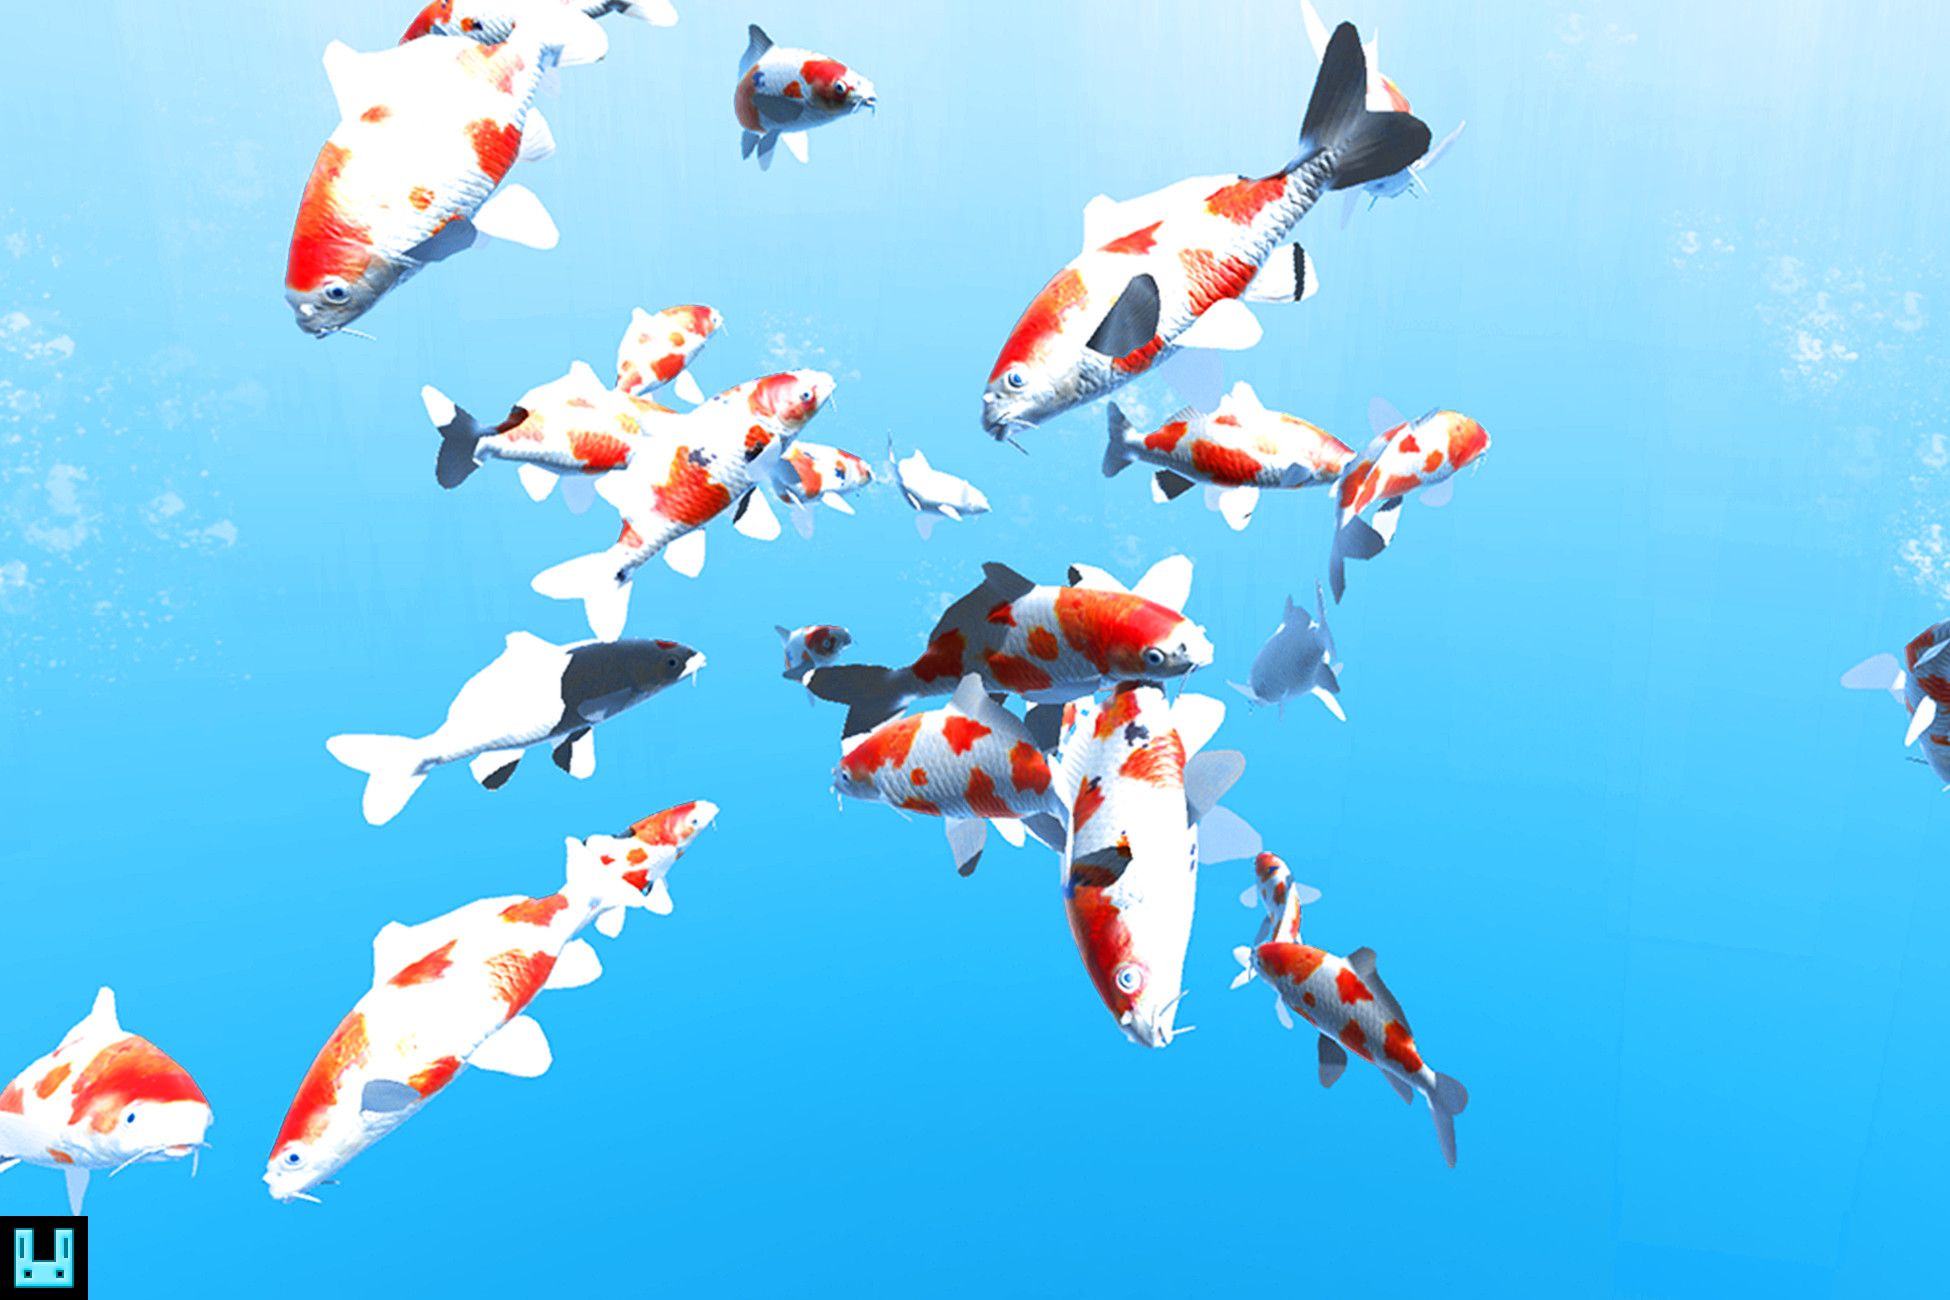 A school of koi fish swimming in a blue pond - Koi fish